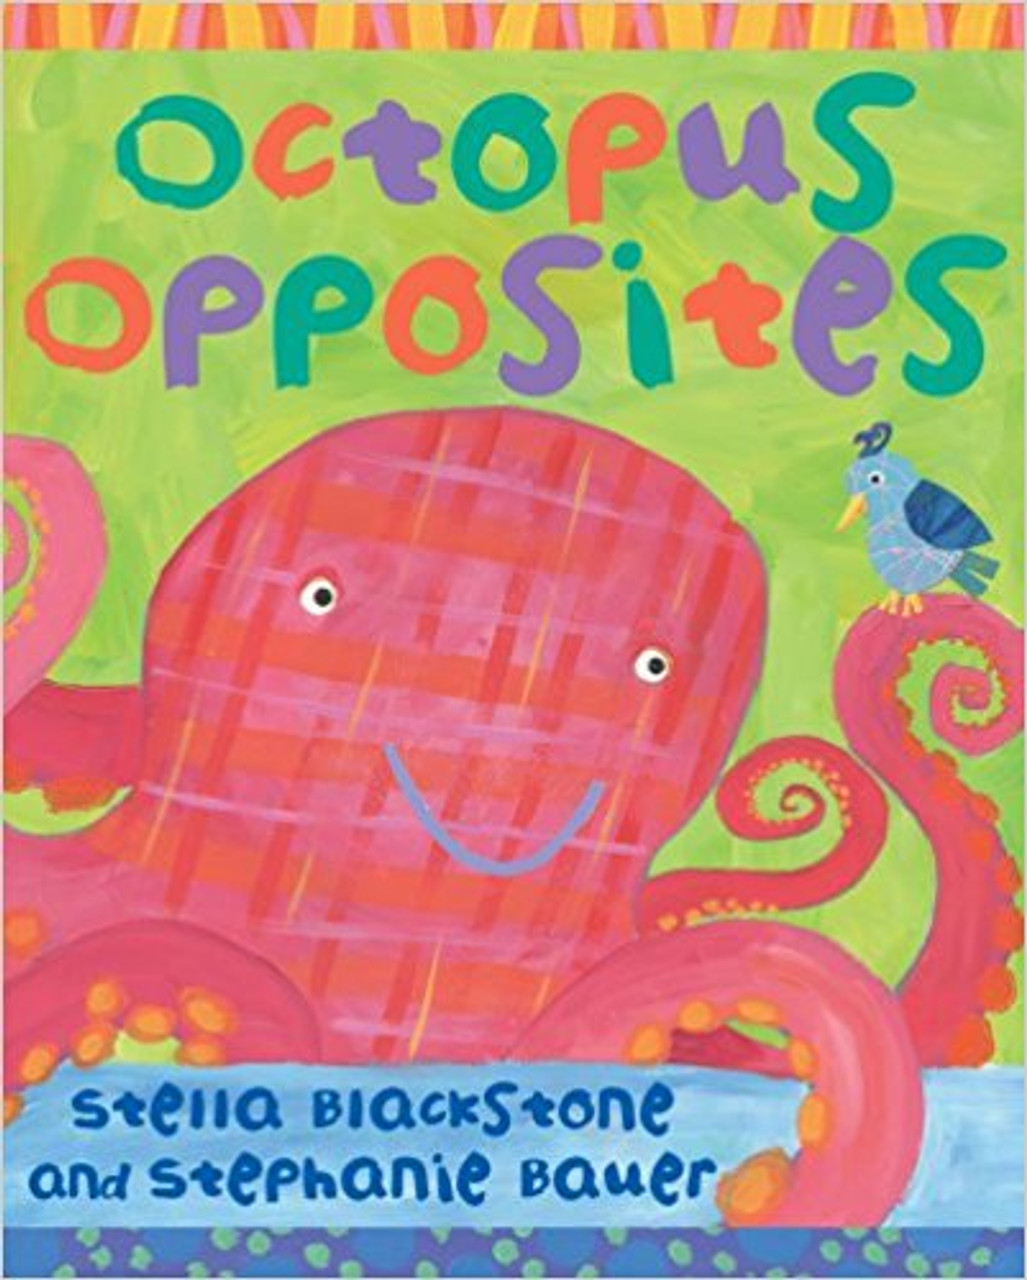 Octopus Opposites by Stella Blackstone